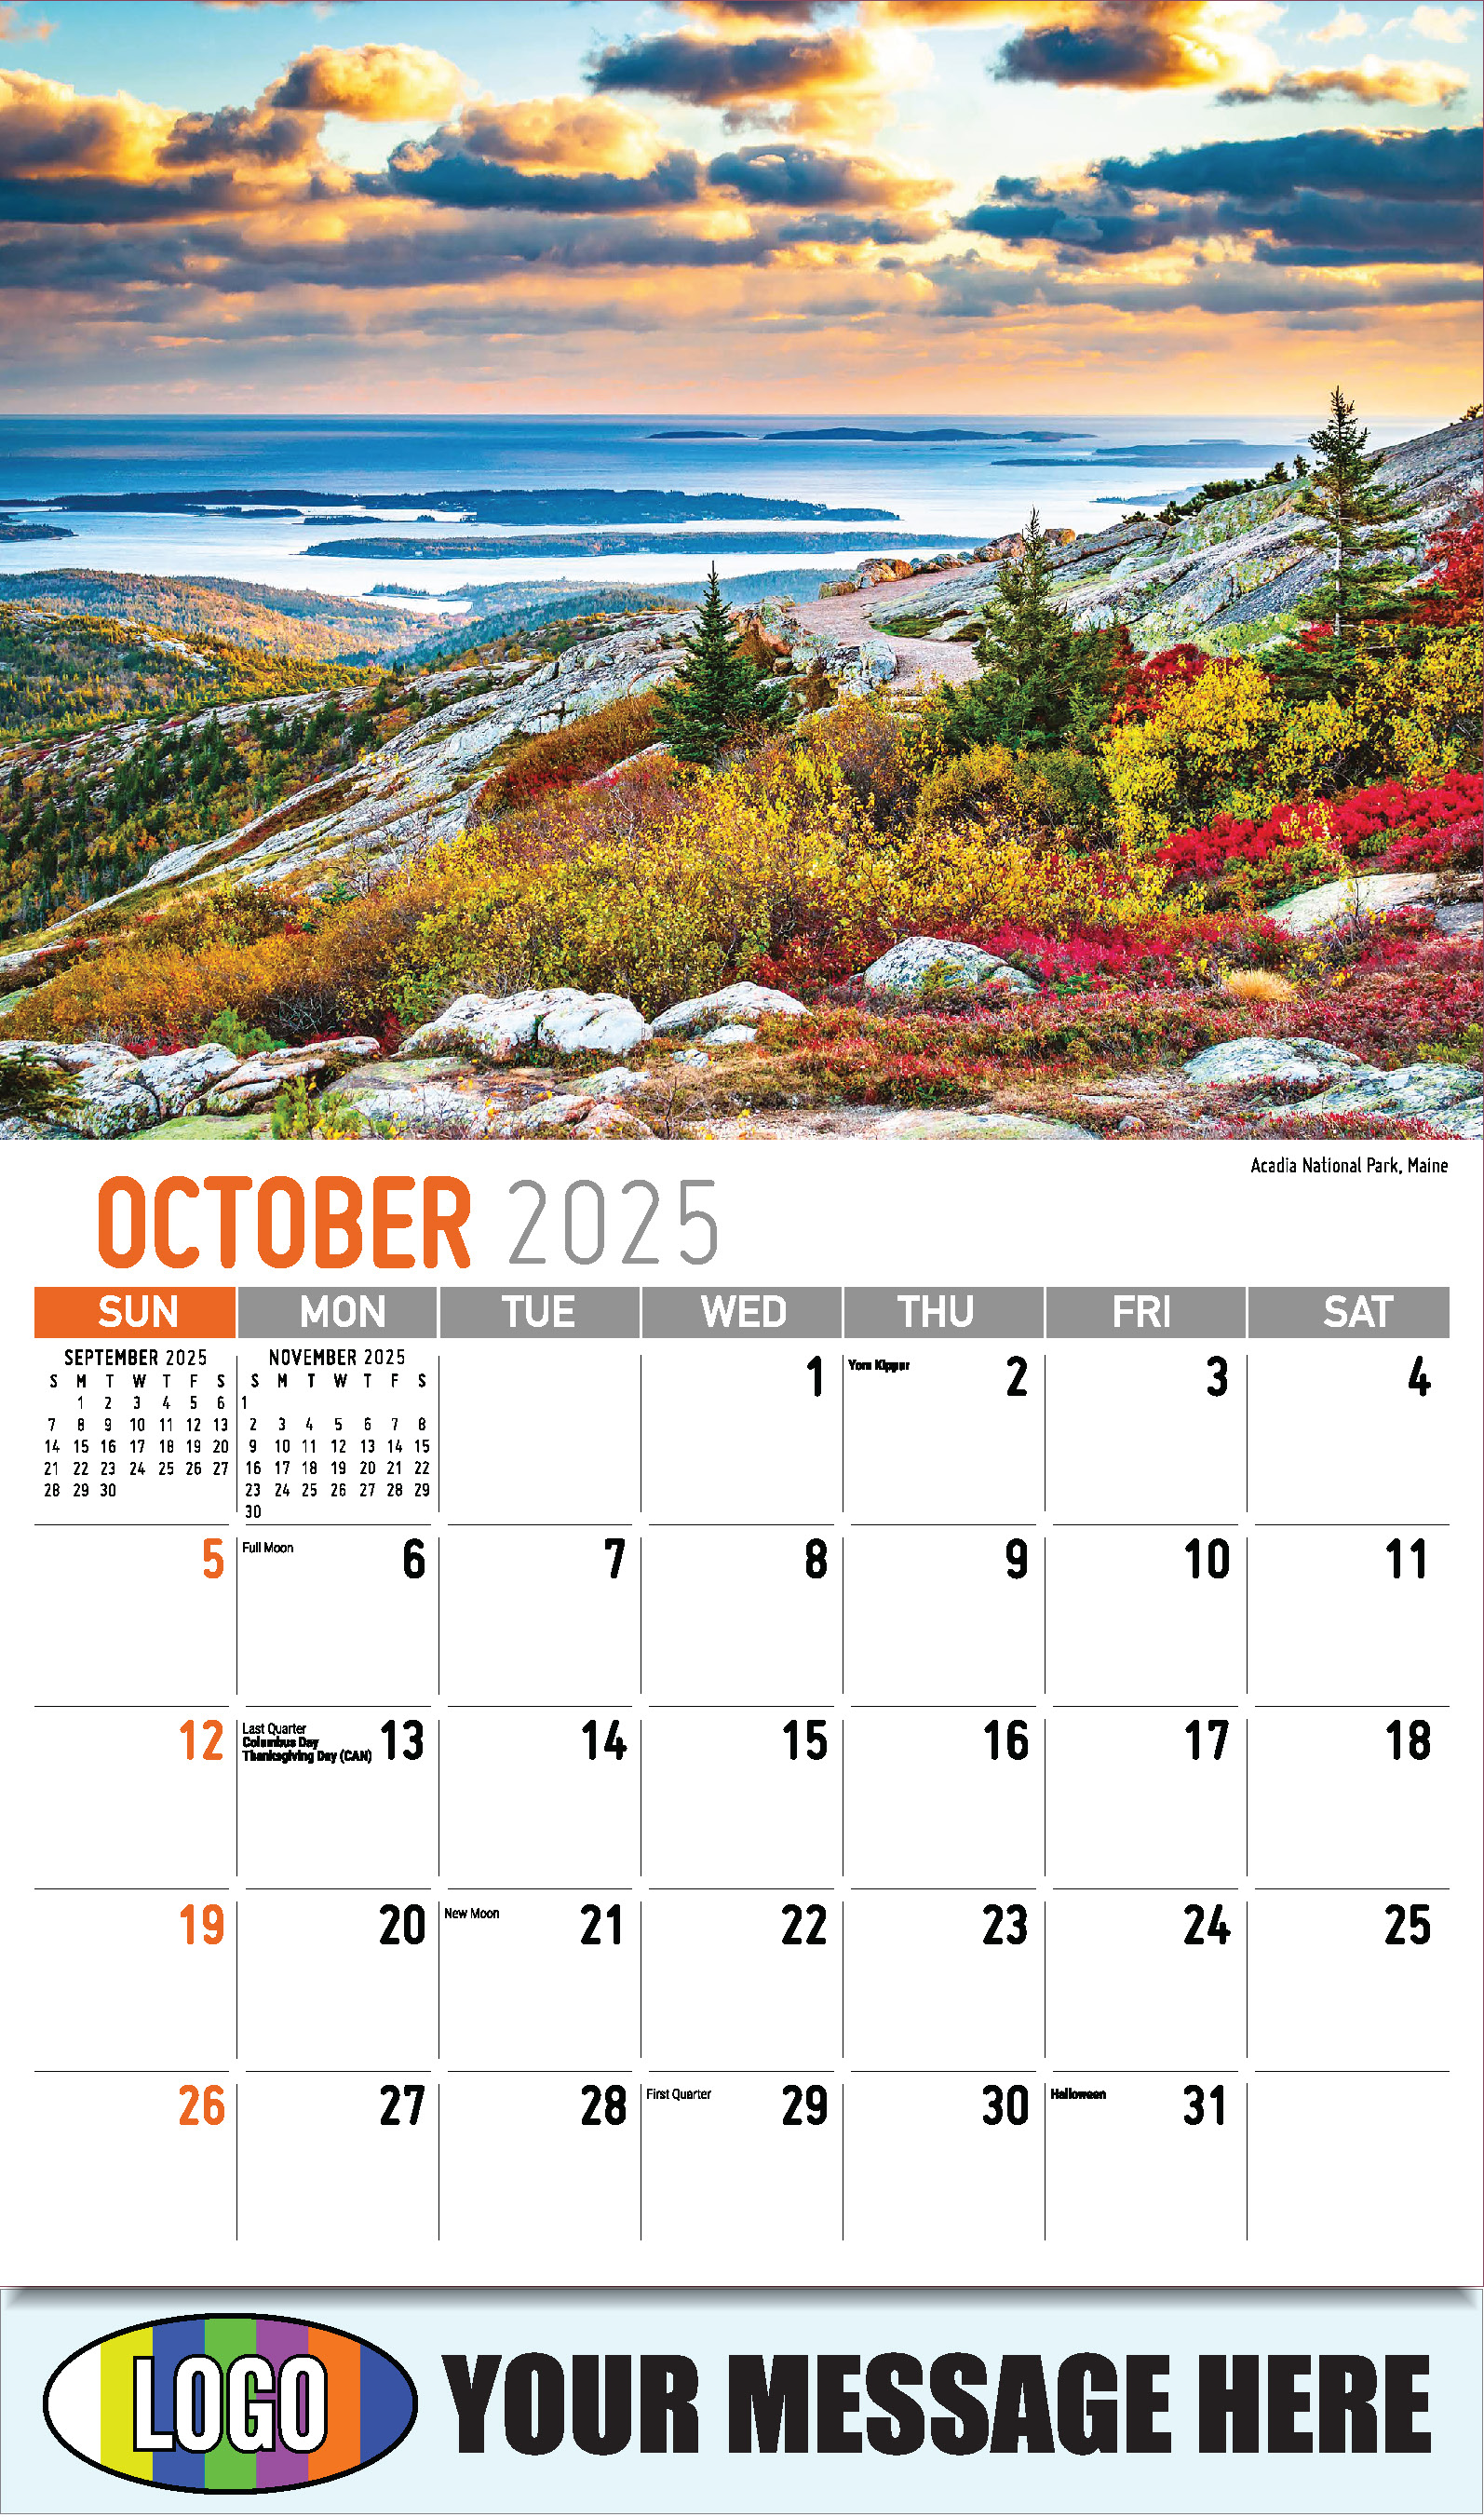 Scenes of New England 2025 Business Advertising Wall Calendar - October